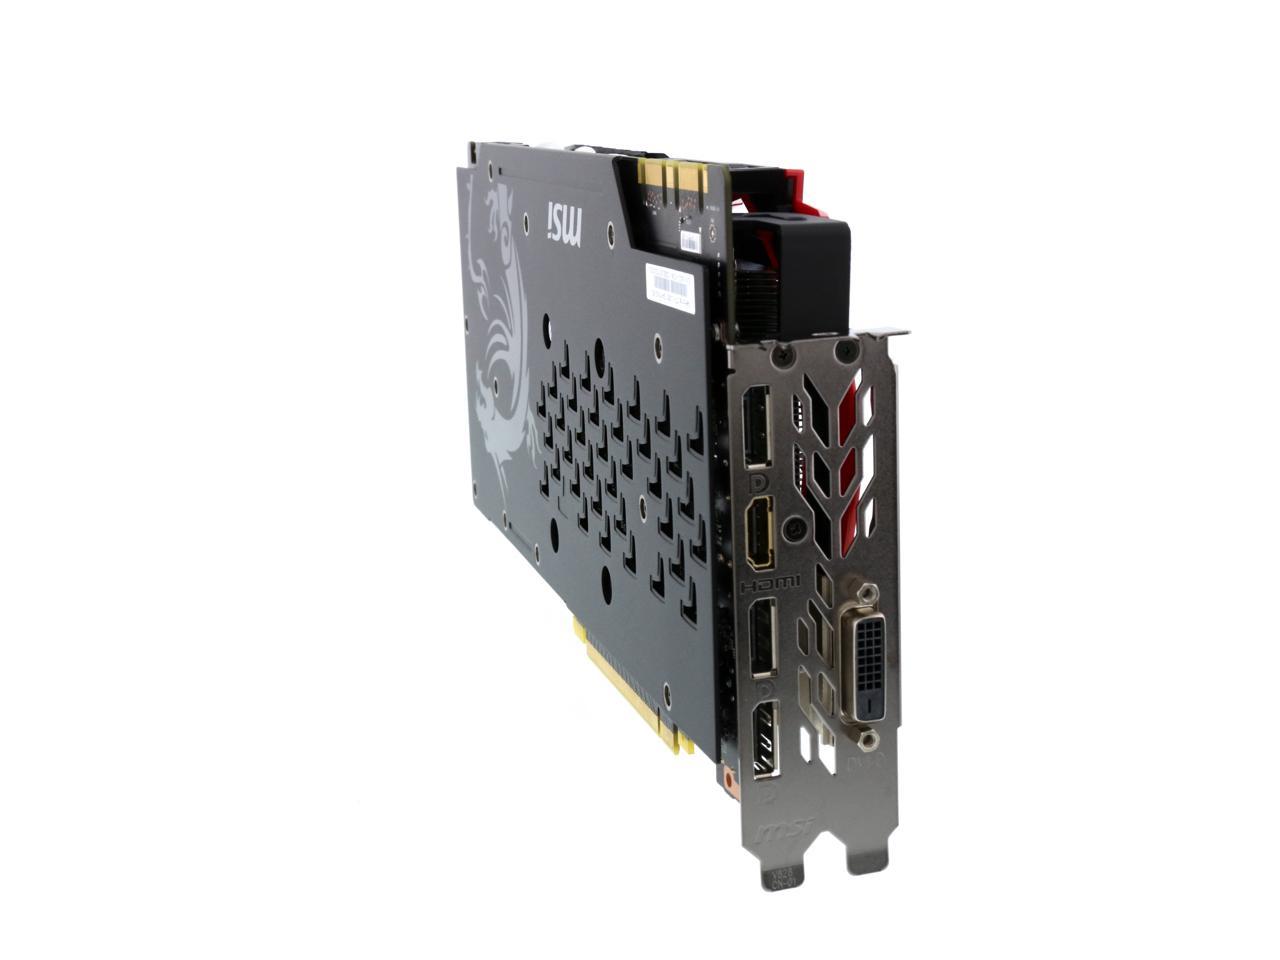 MSI GeForce GTX 1080 8GB GDDR5X PCI Express 3.0 x16 SLI Support ATX Video  Card GTX 1080 GAMING 8G